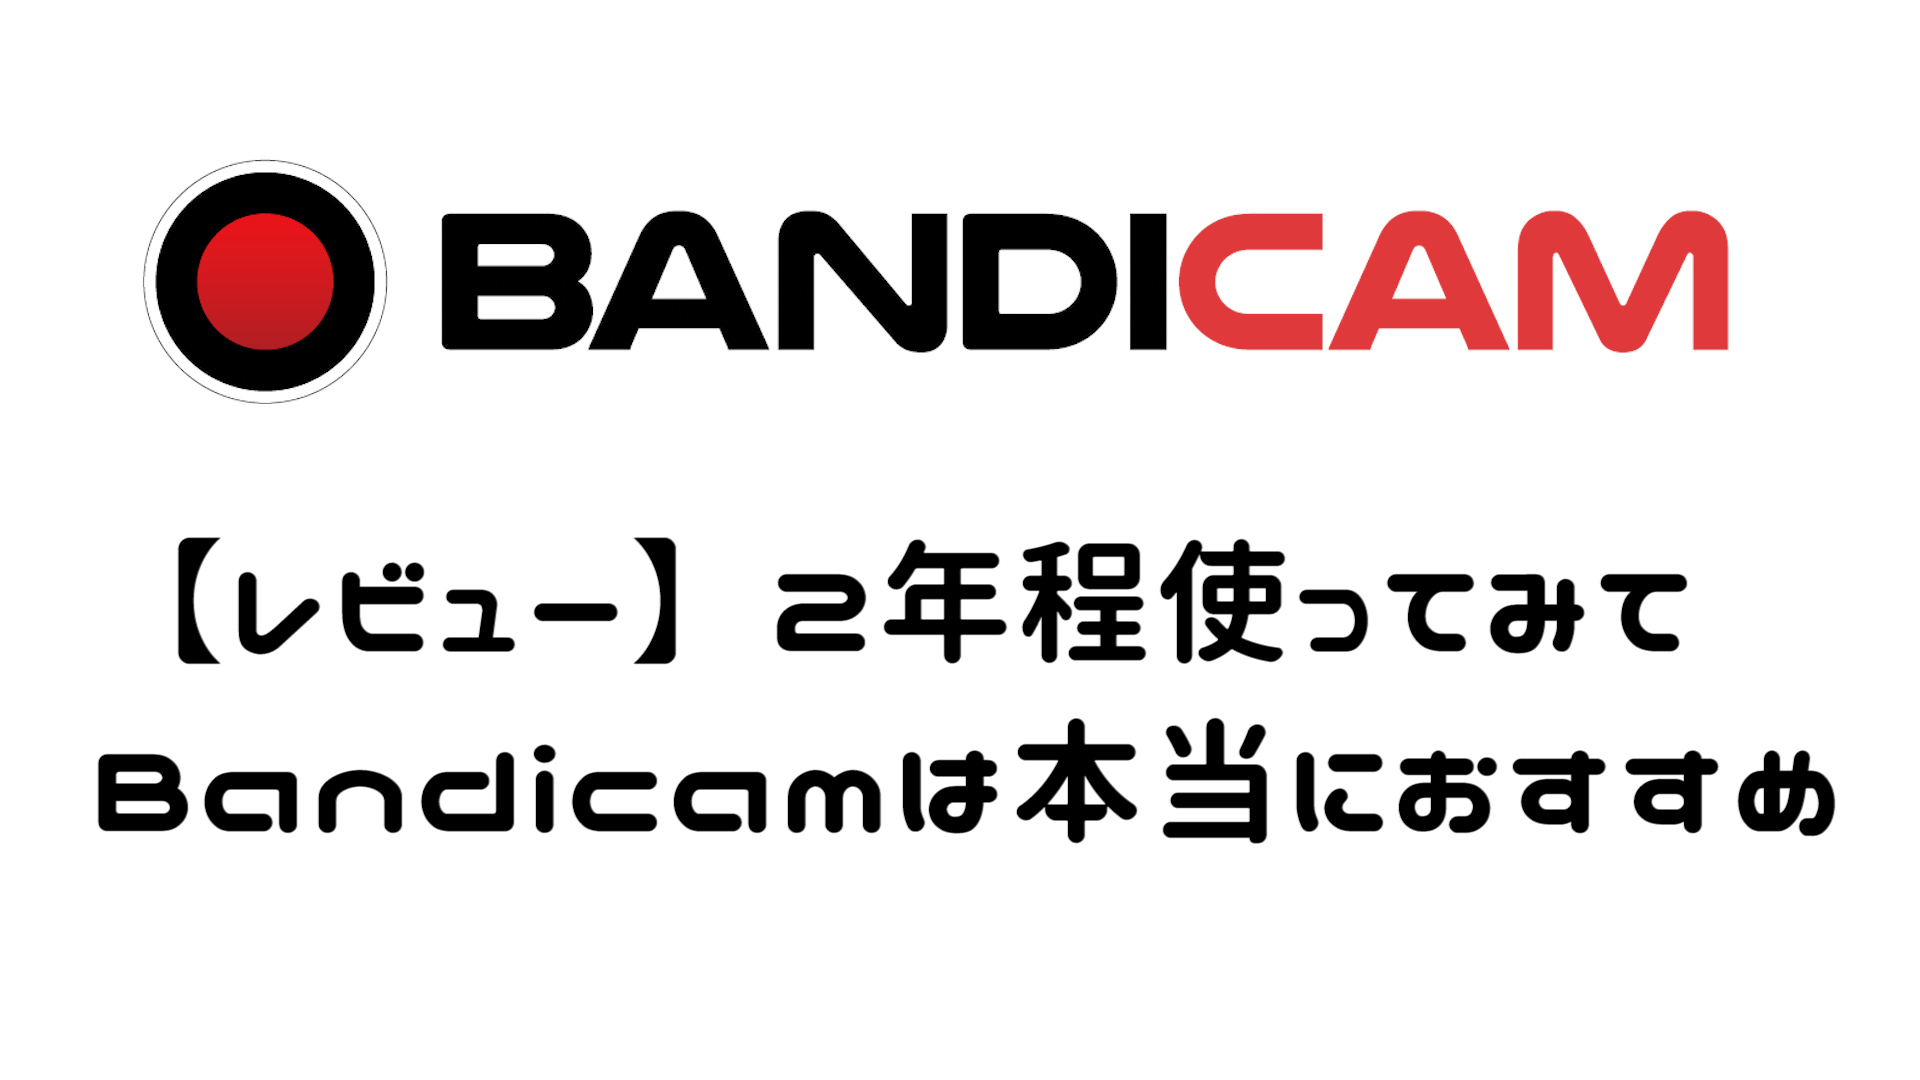 Bandicam バンディカムは有料だが ゲーム実況者には本当におすすめ 比較動画検証